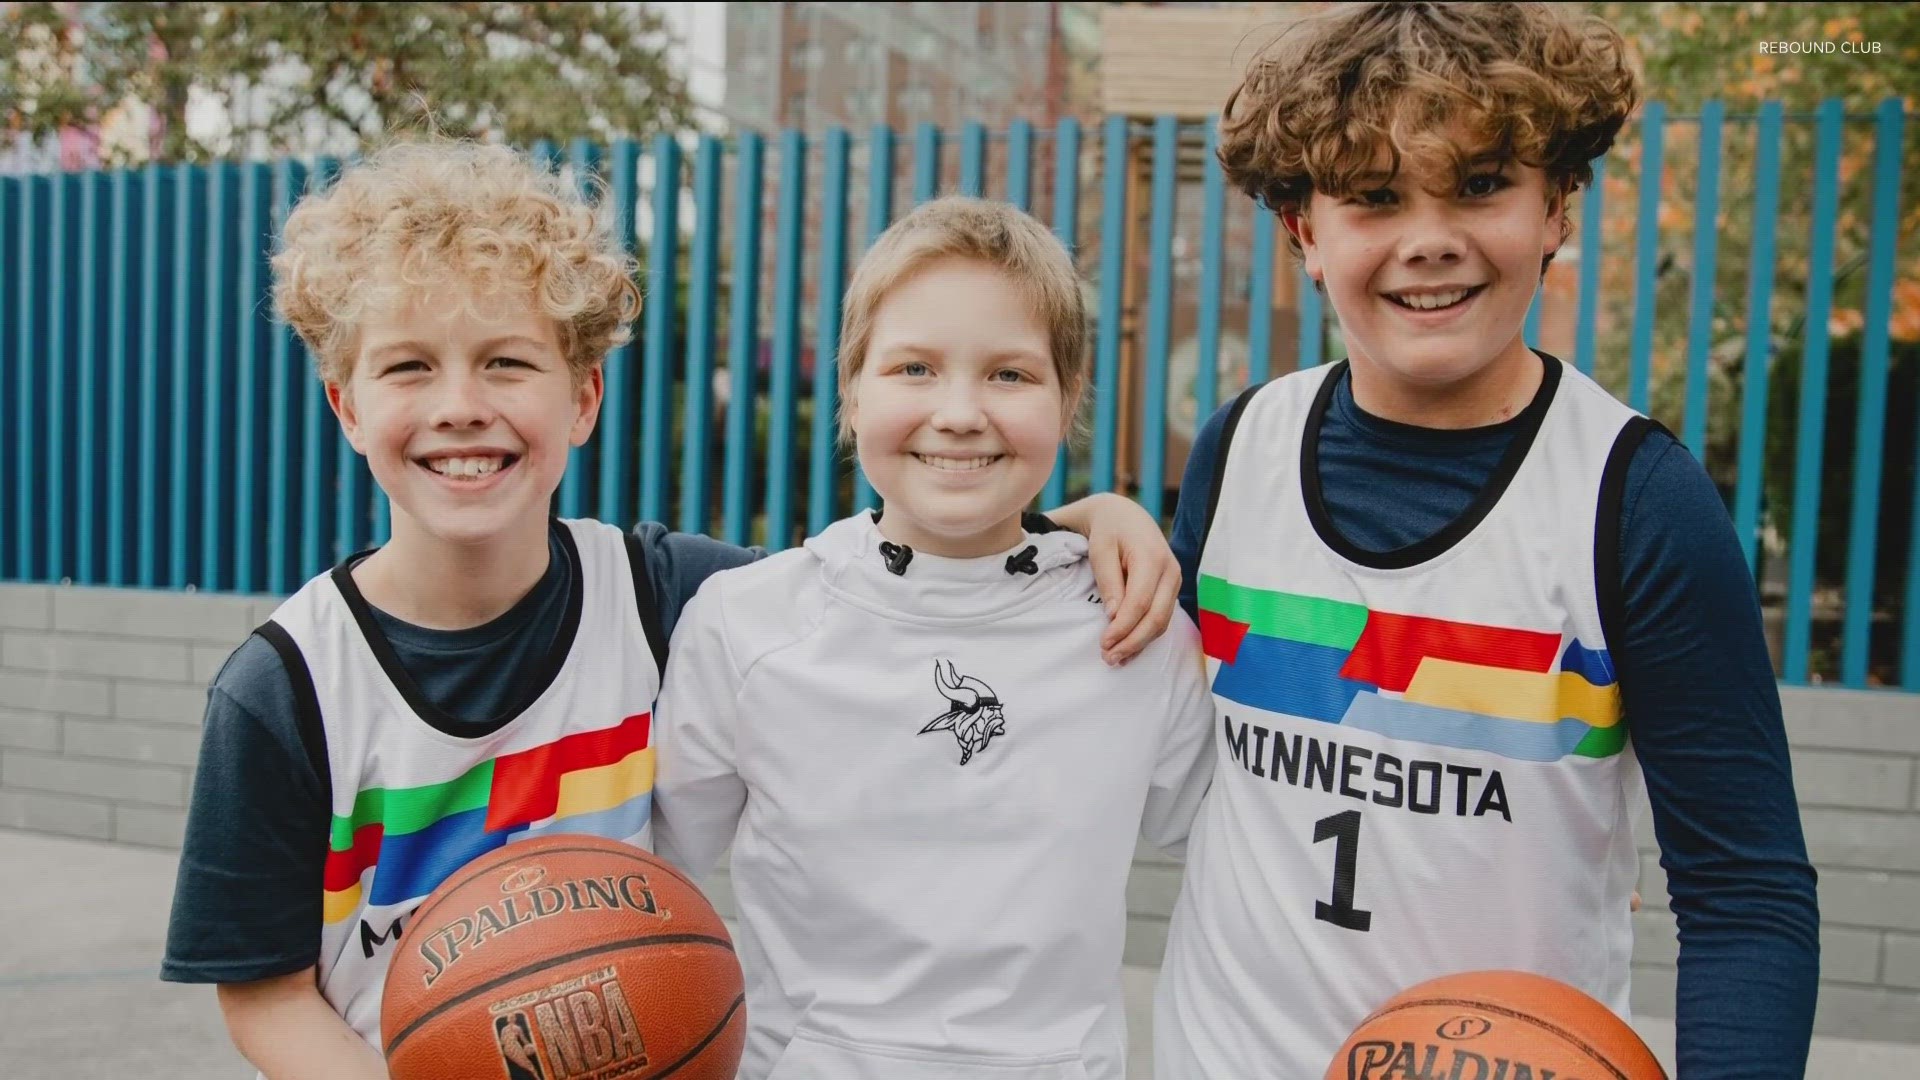 The Rebound Club brings NBA experiences to children battling life-threatening diseases.